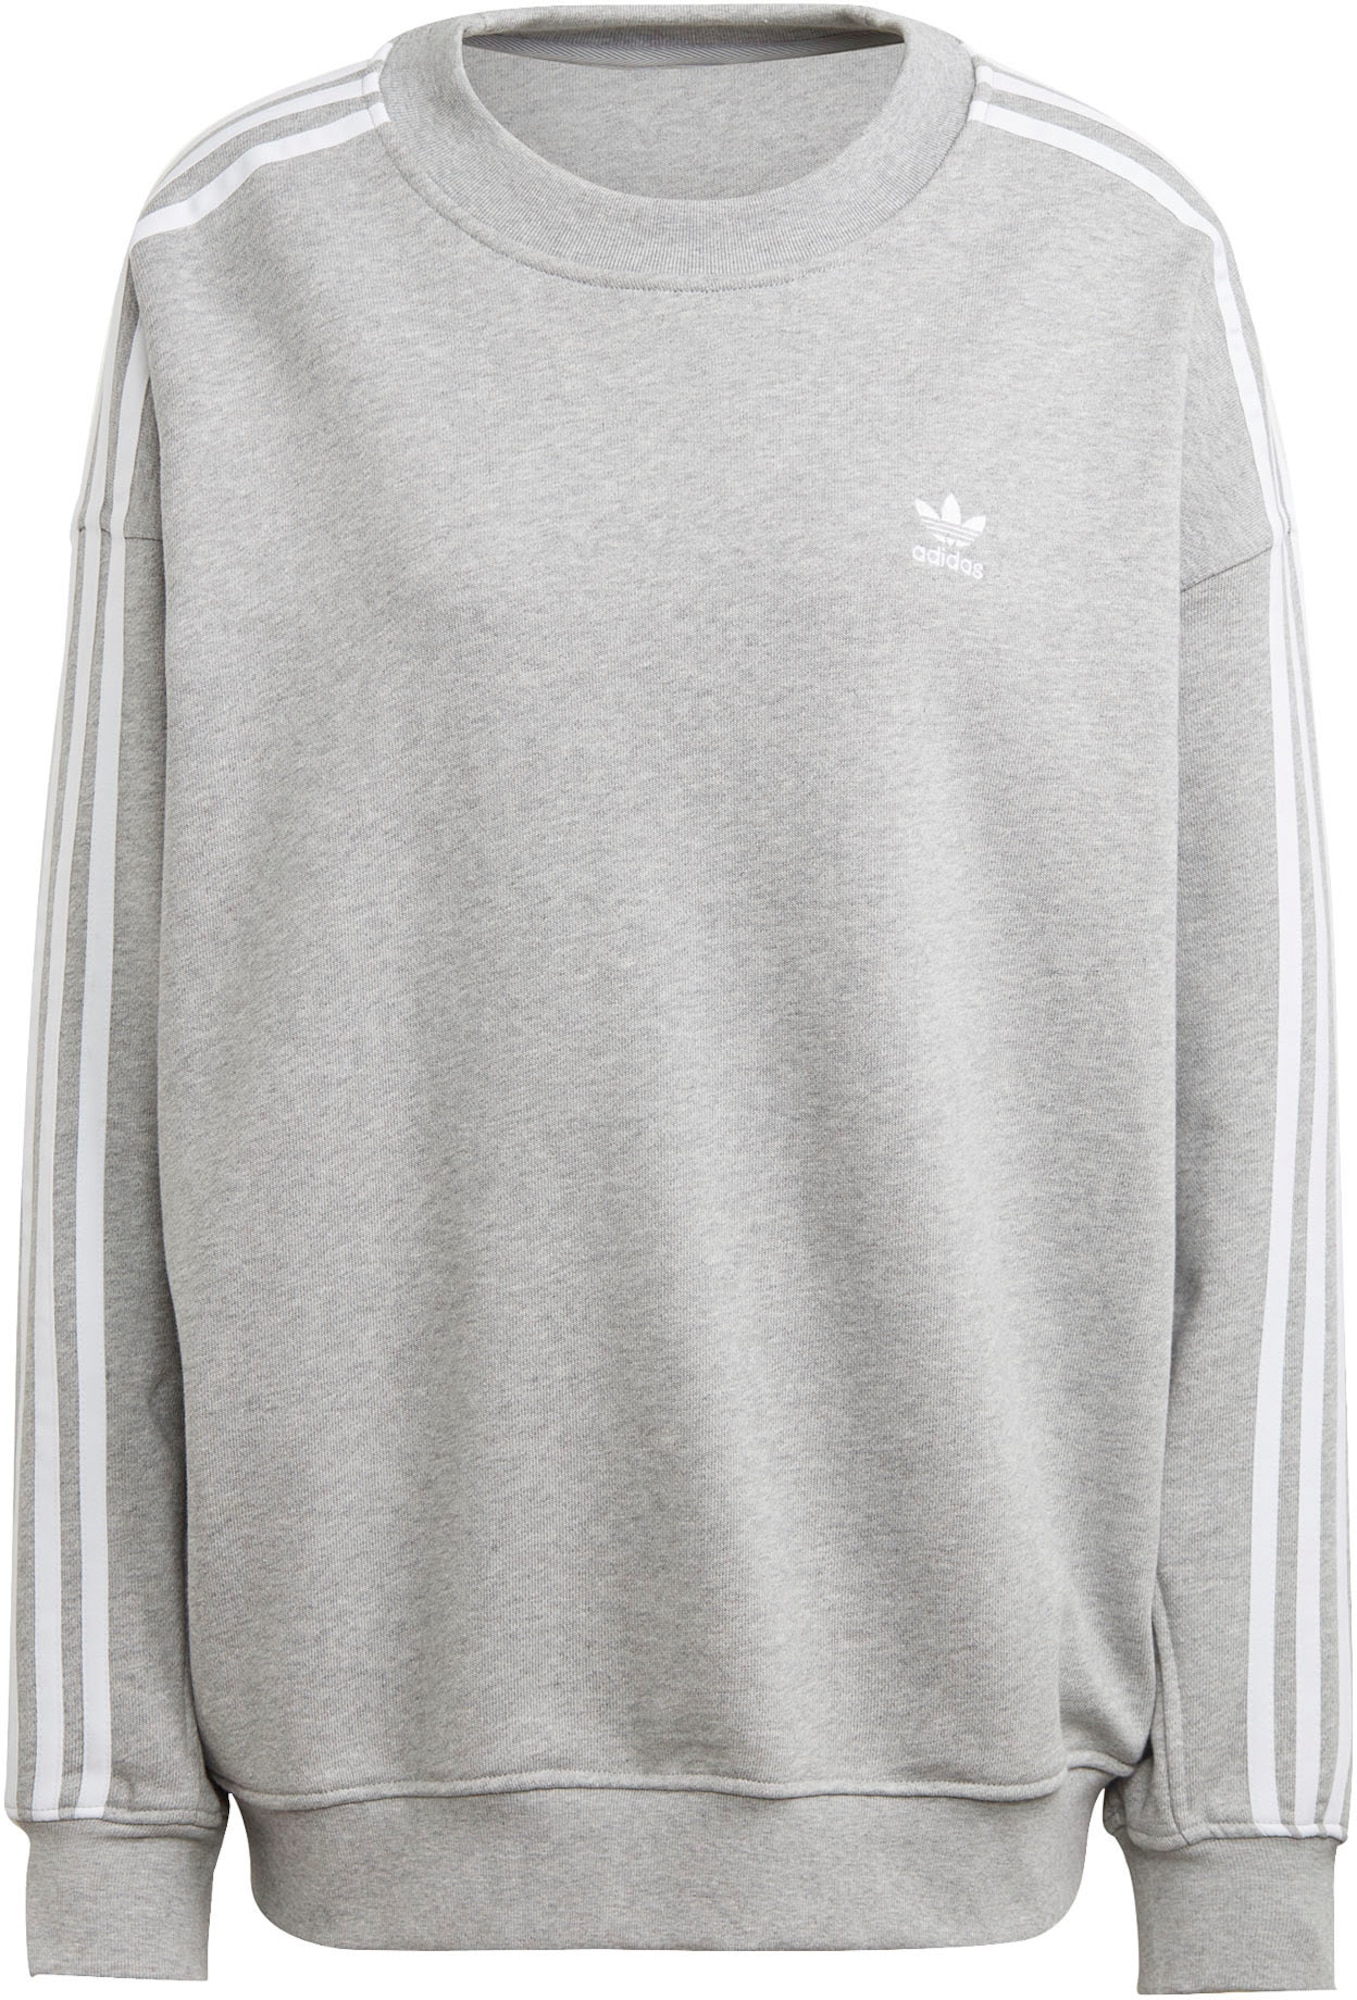 ADIDAS ORIGINALS Sweater majica  siva melange / bijela